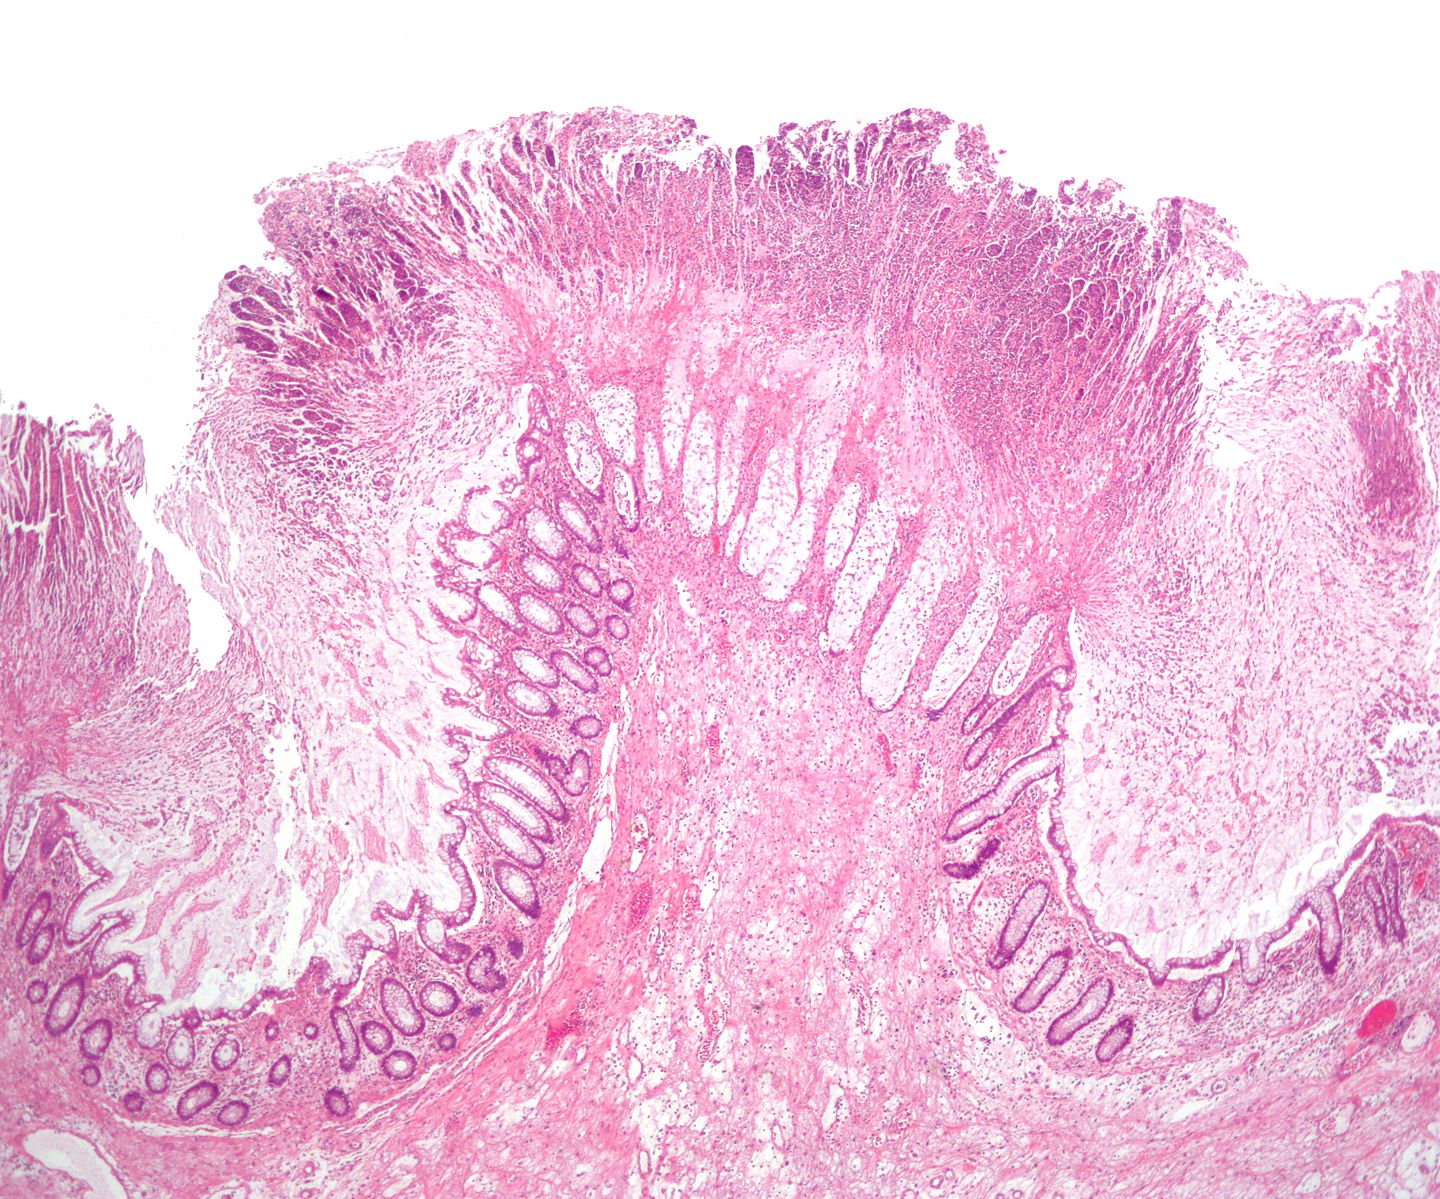 Pseudomembranous colitis. H& E staining showing pseudomembranes in Clostridium colitis [41]